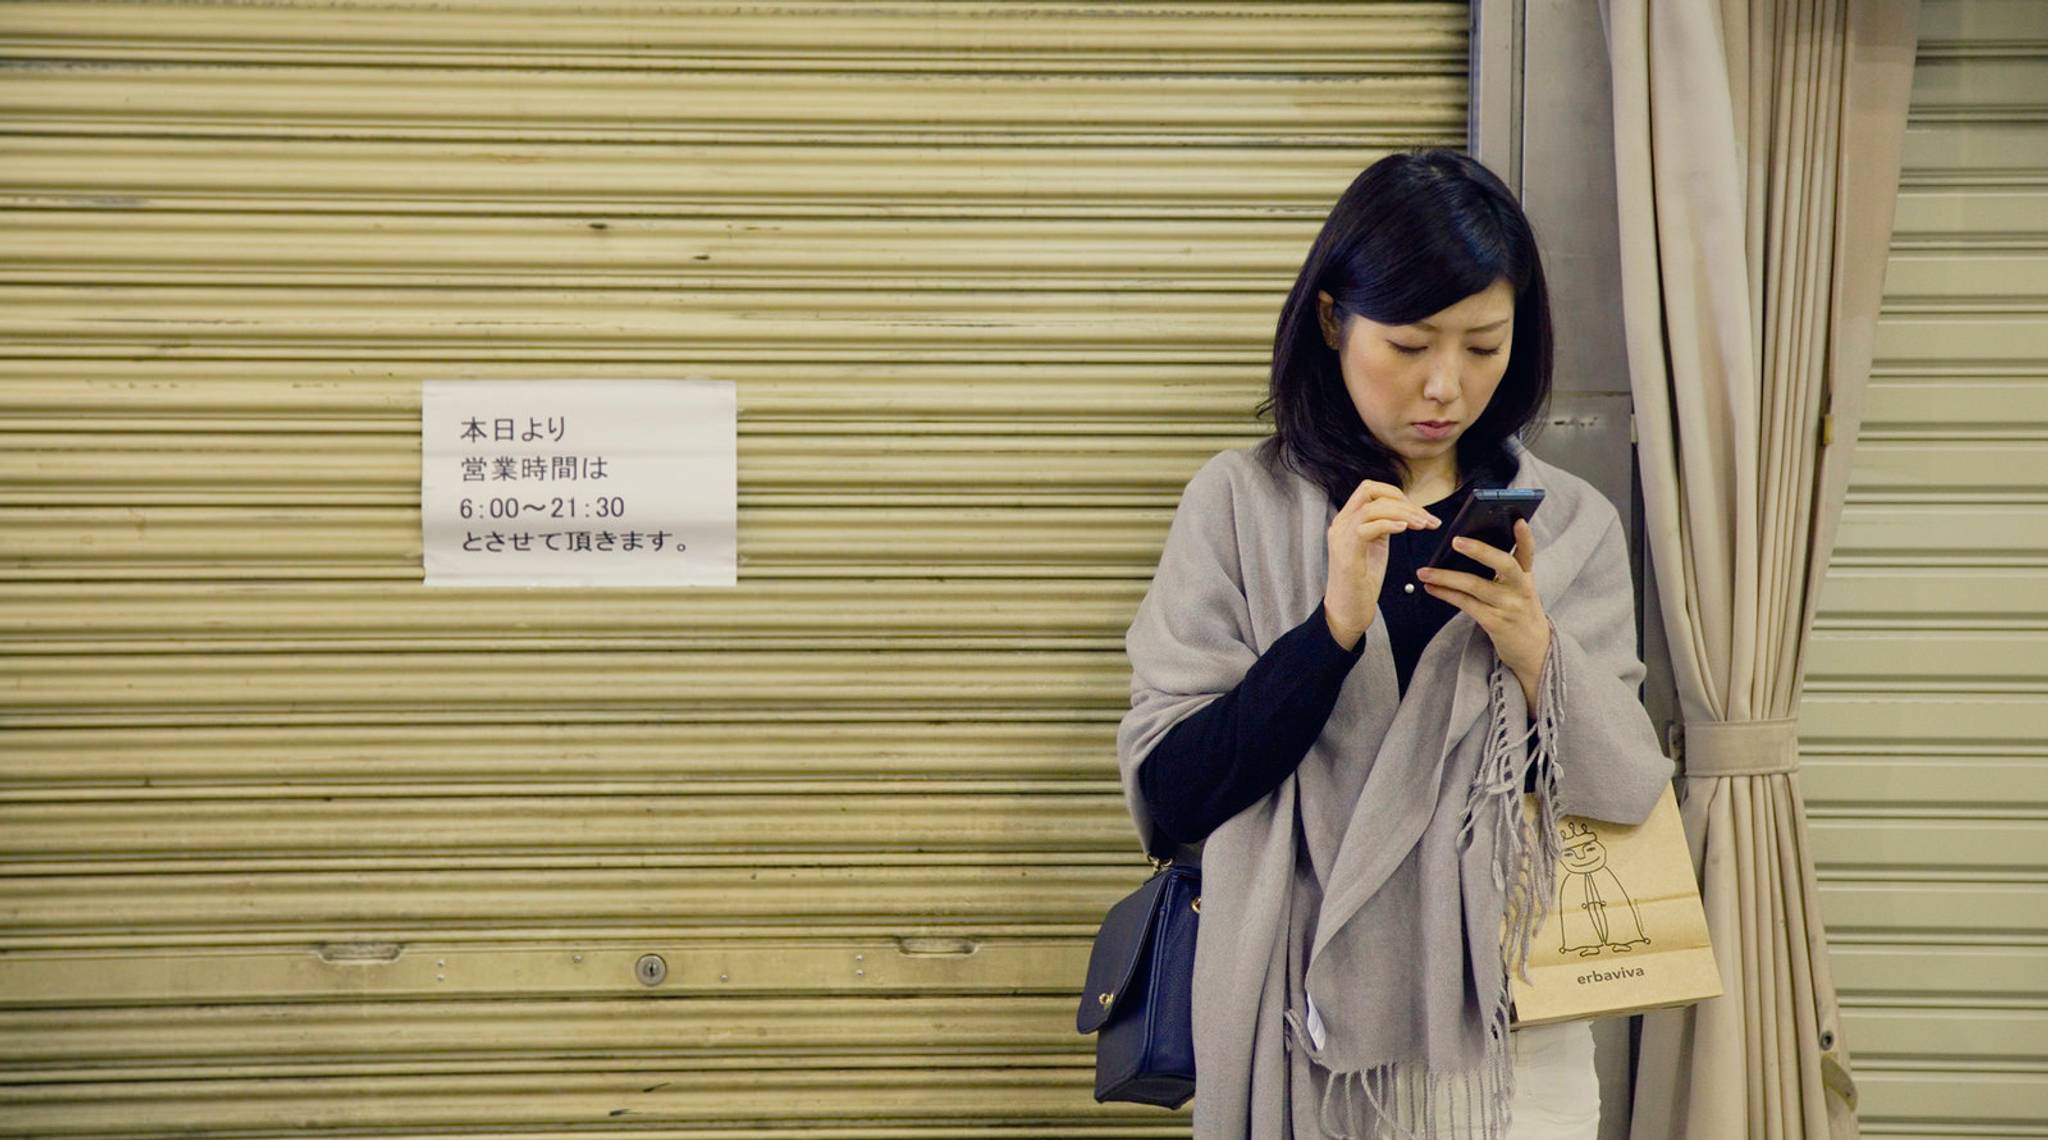 Smartphone users trust strangers less